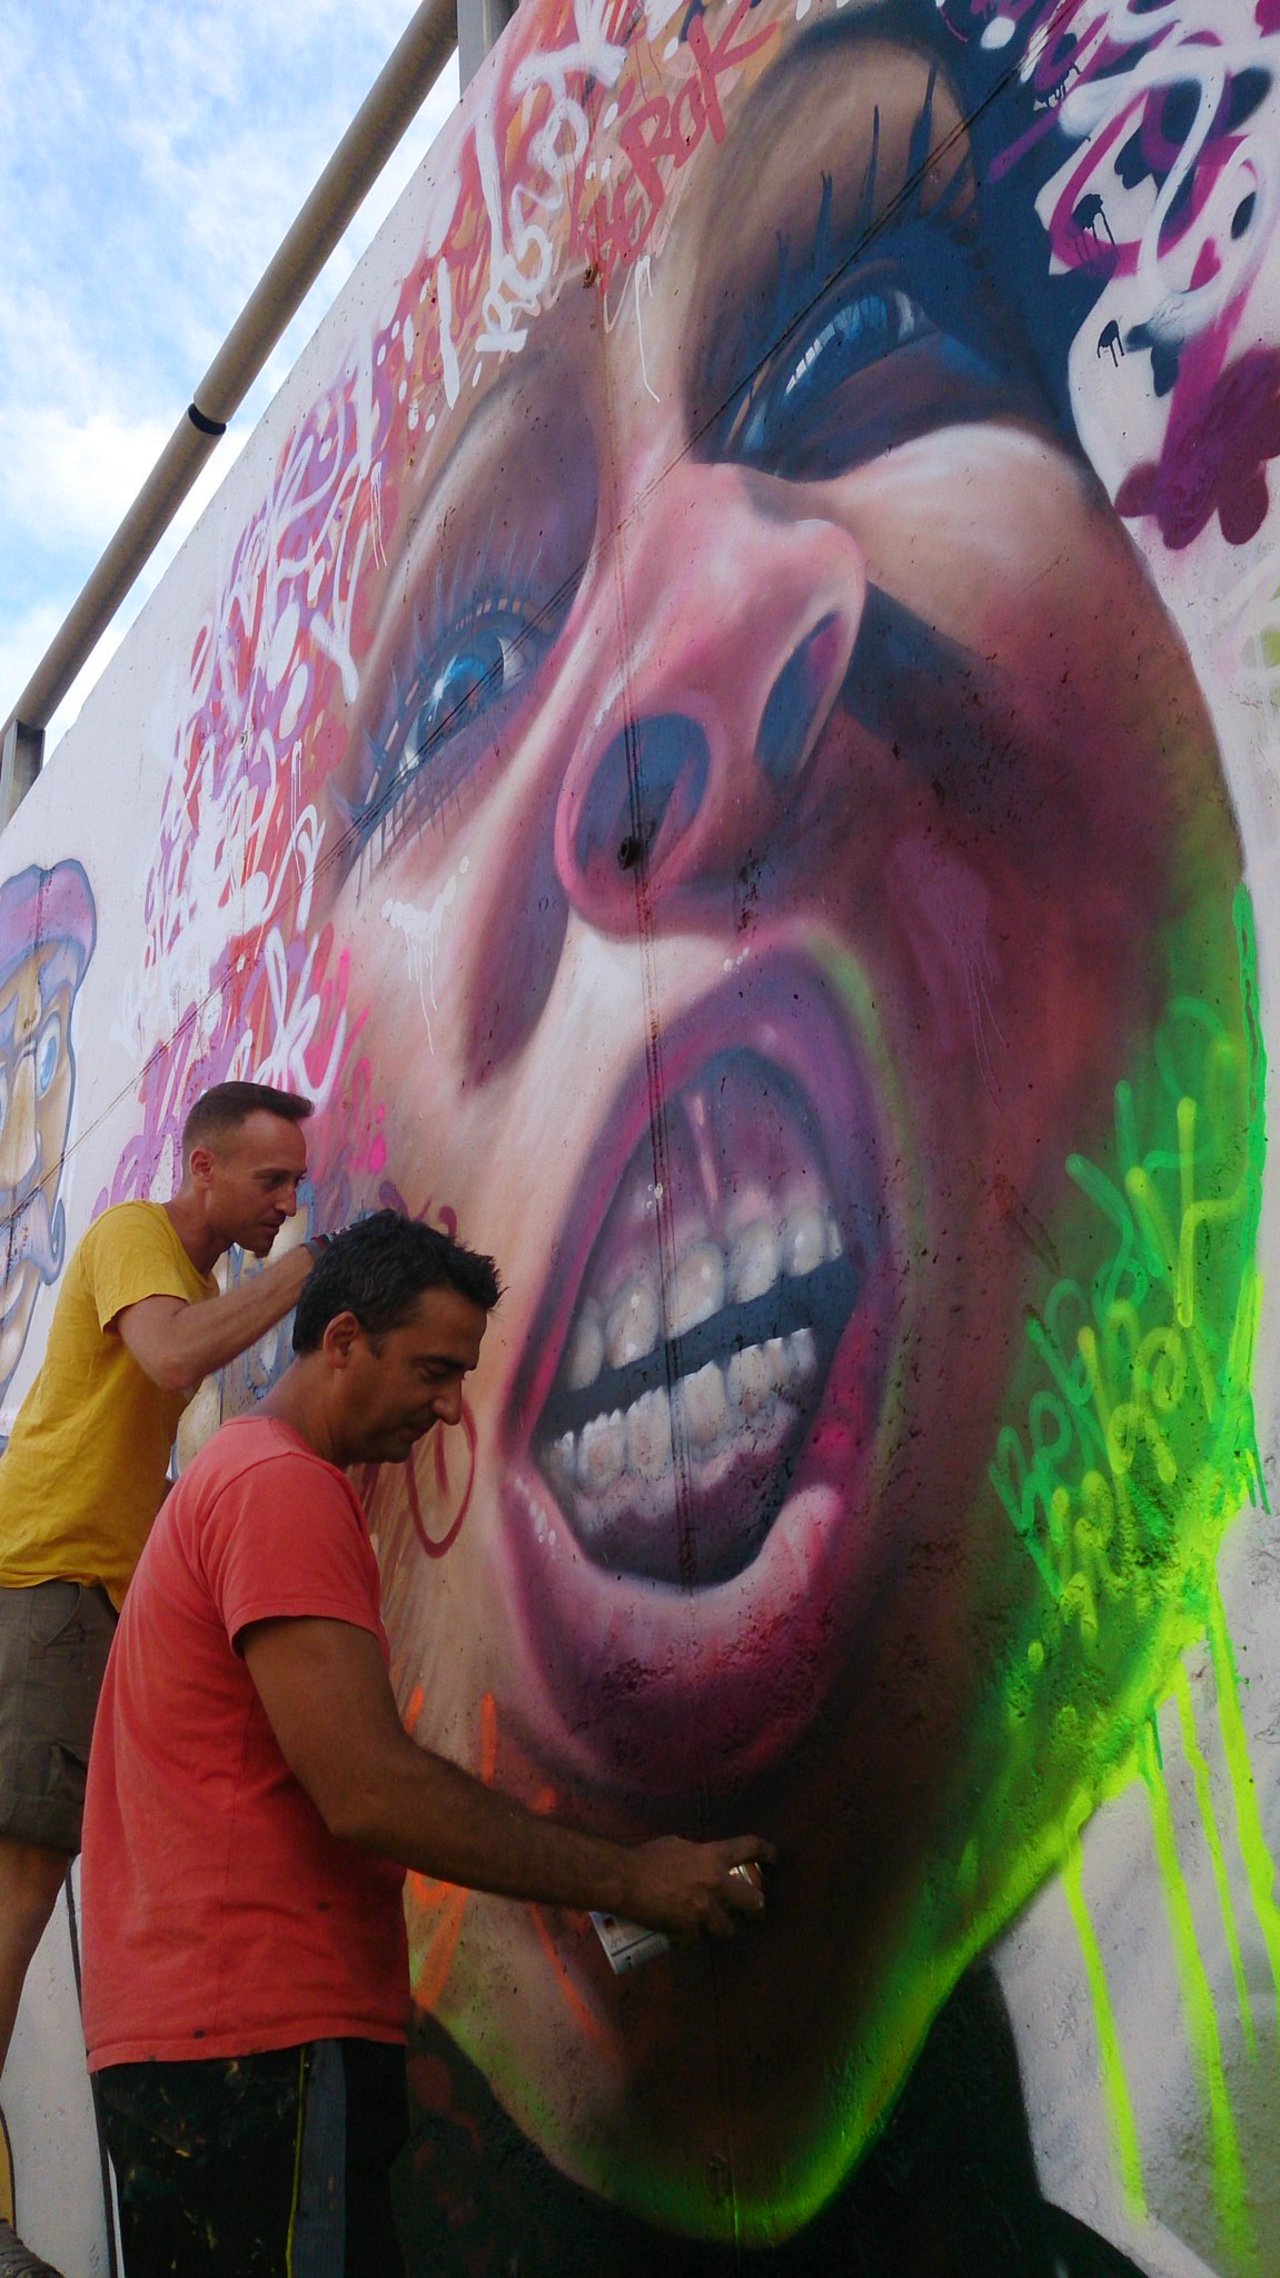 #graffiti #mural #arteurbano #urbanart #streetart #graffitis #berok #murales #artist #santadriadelbesos #izan #arte http://t.co/VY8g137InN